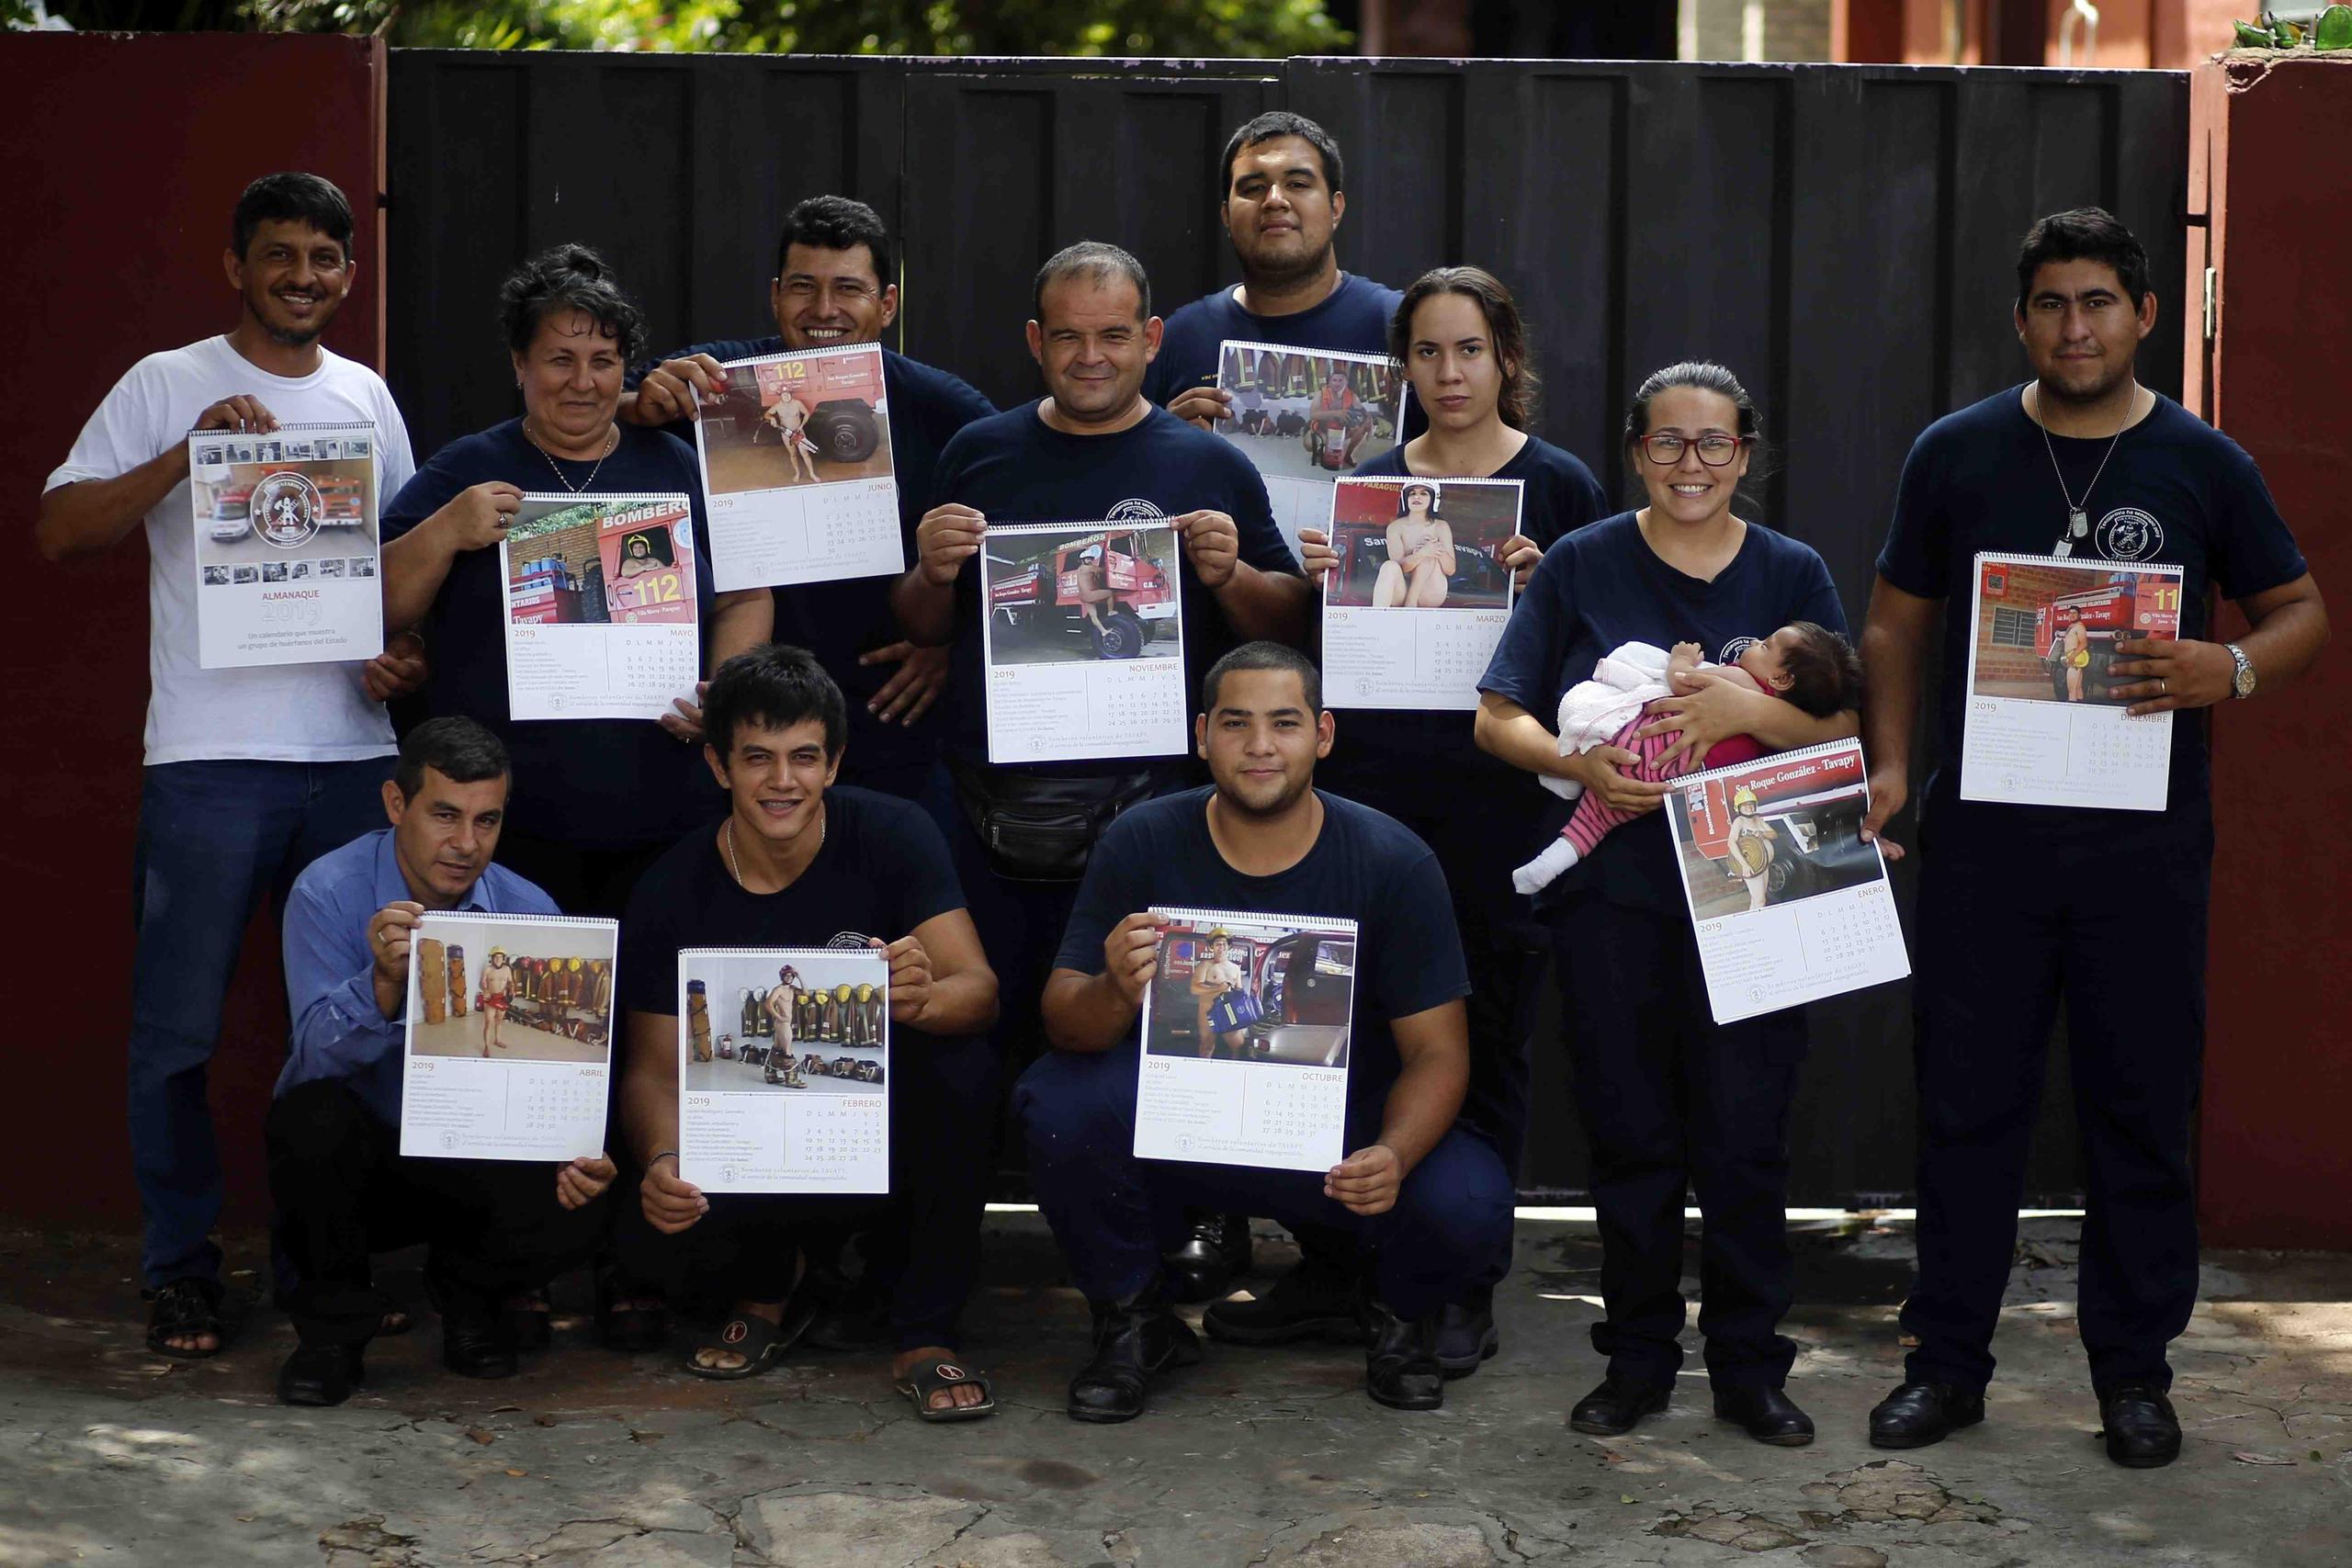 Los bomberos de San Roque González posan para una foto de grupo antes de salir a la calle a vender calendarios, en Asunción, Paraguay. (AP / Jorge Saenz)